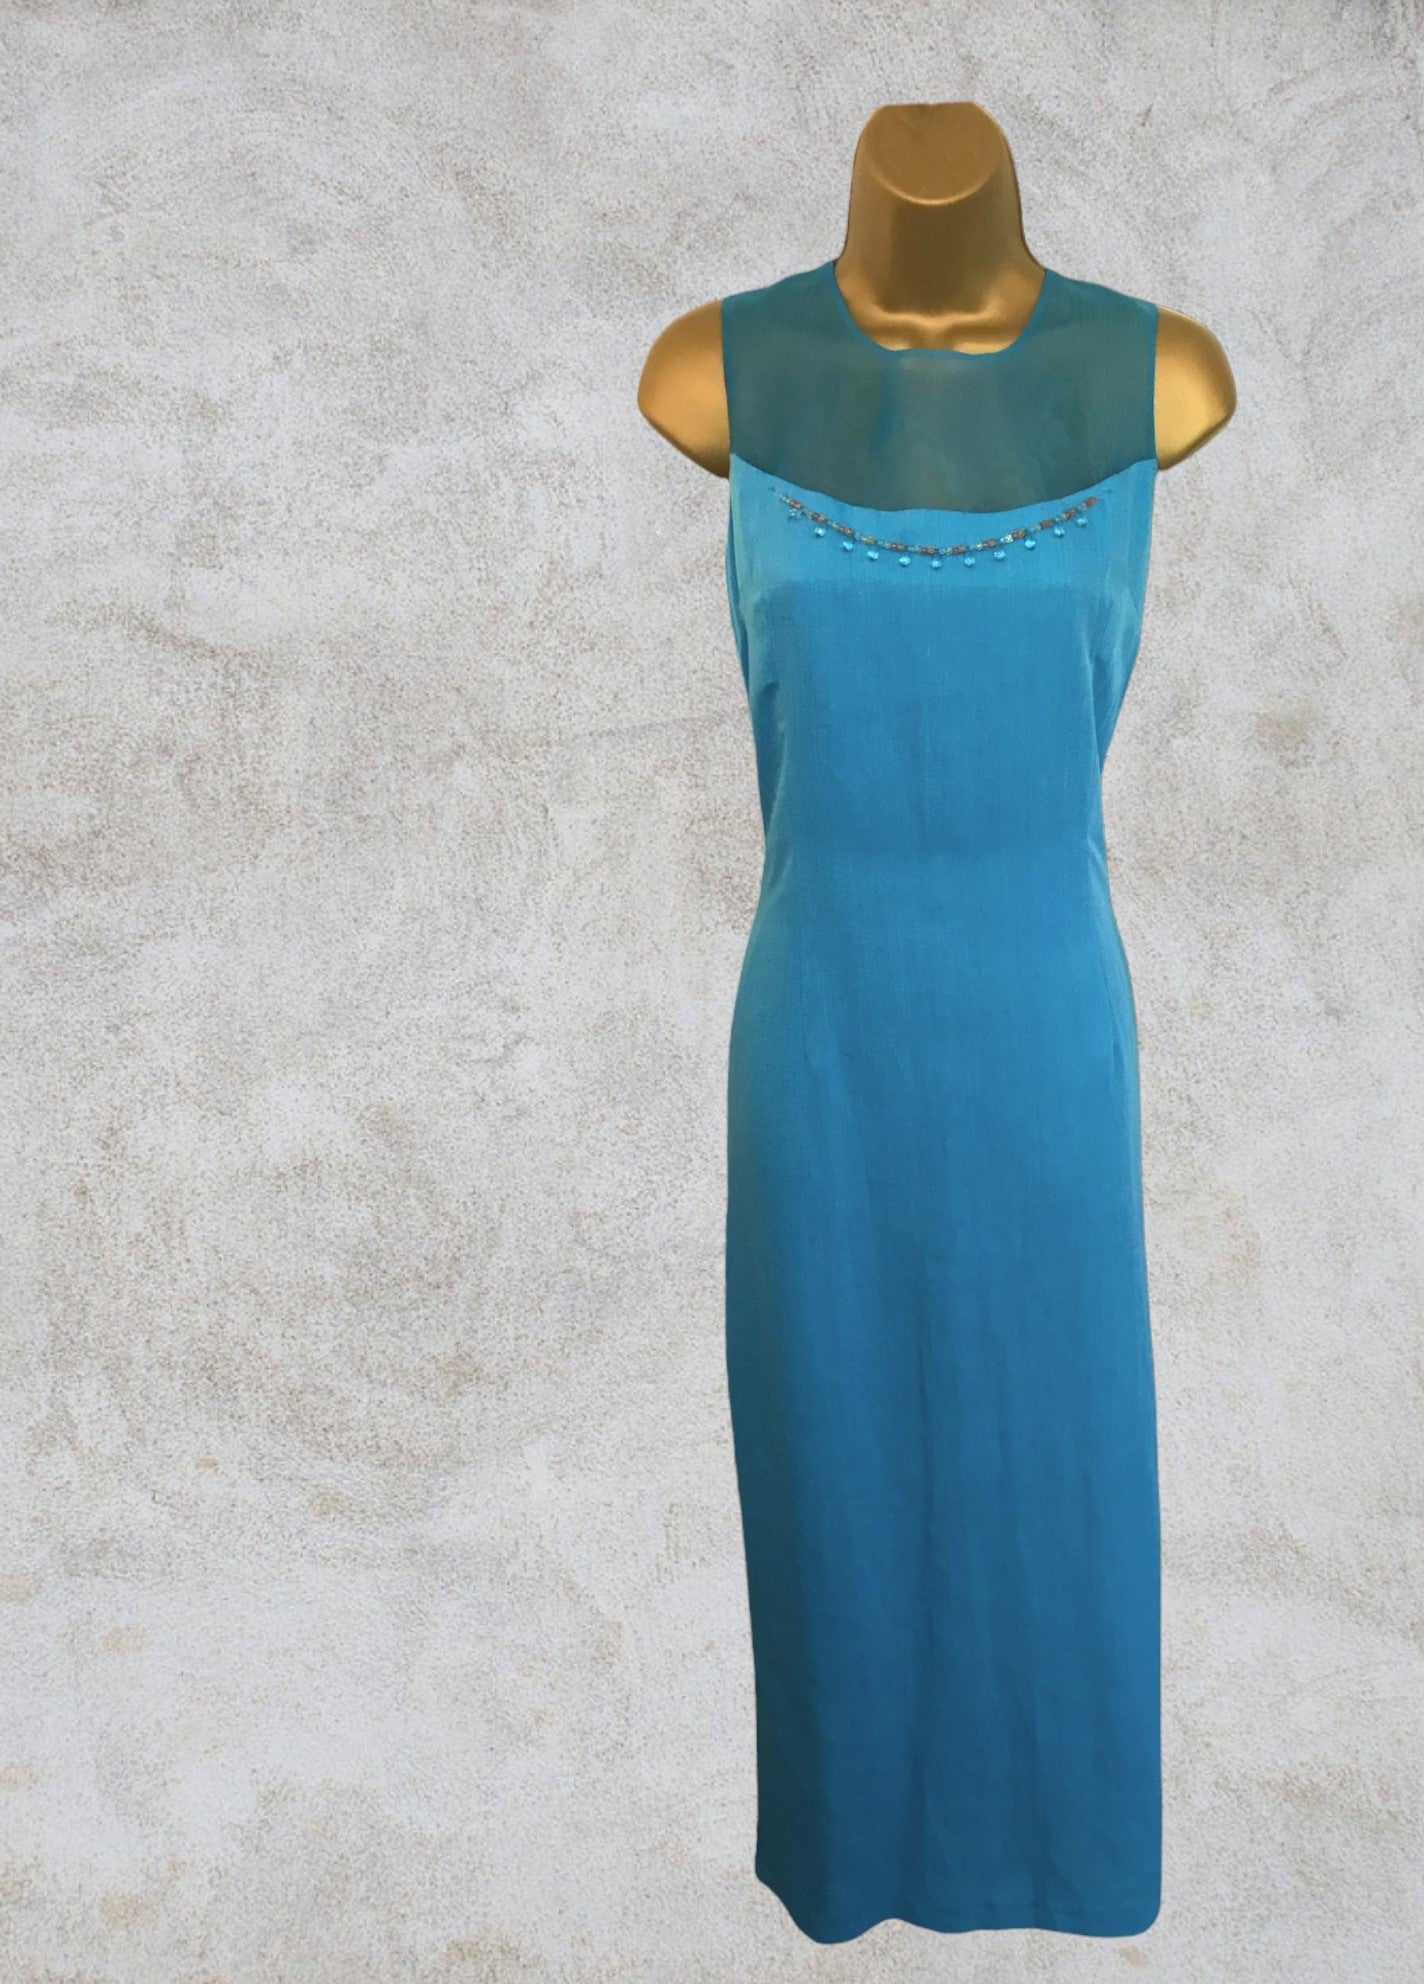 Tuzzi Long Turquoise Blue Linen & Organza Dress UK 10 RRP £179 Timeless Fashions